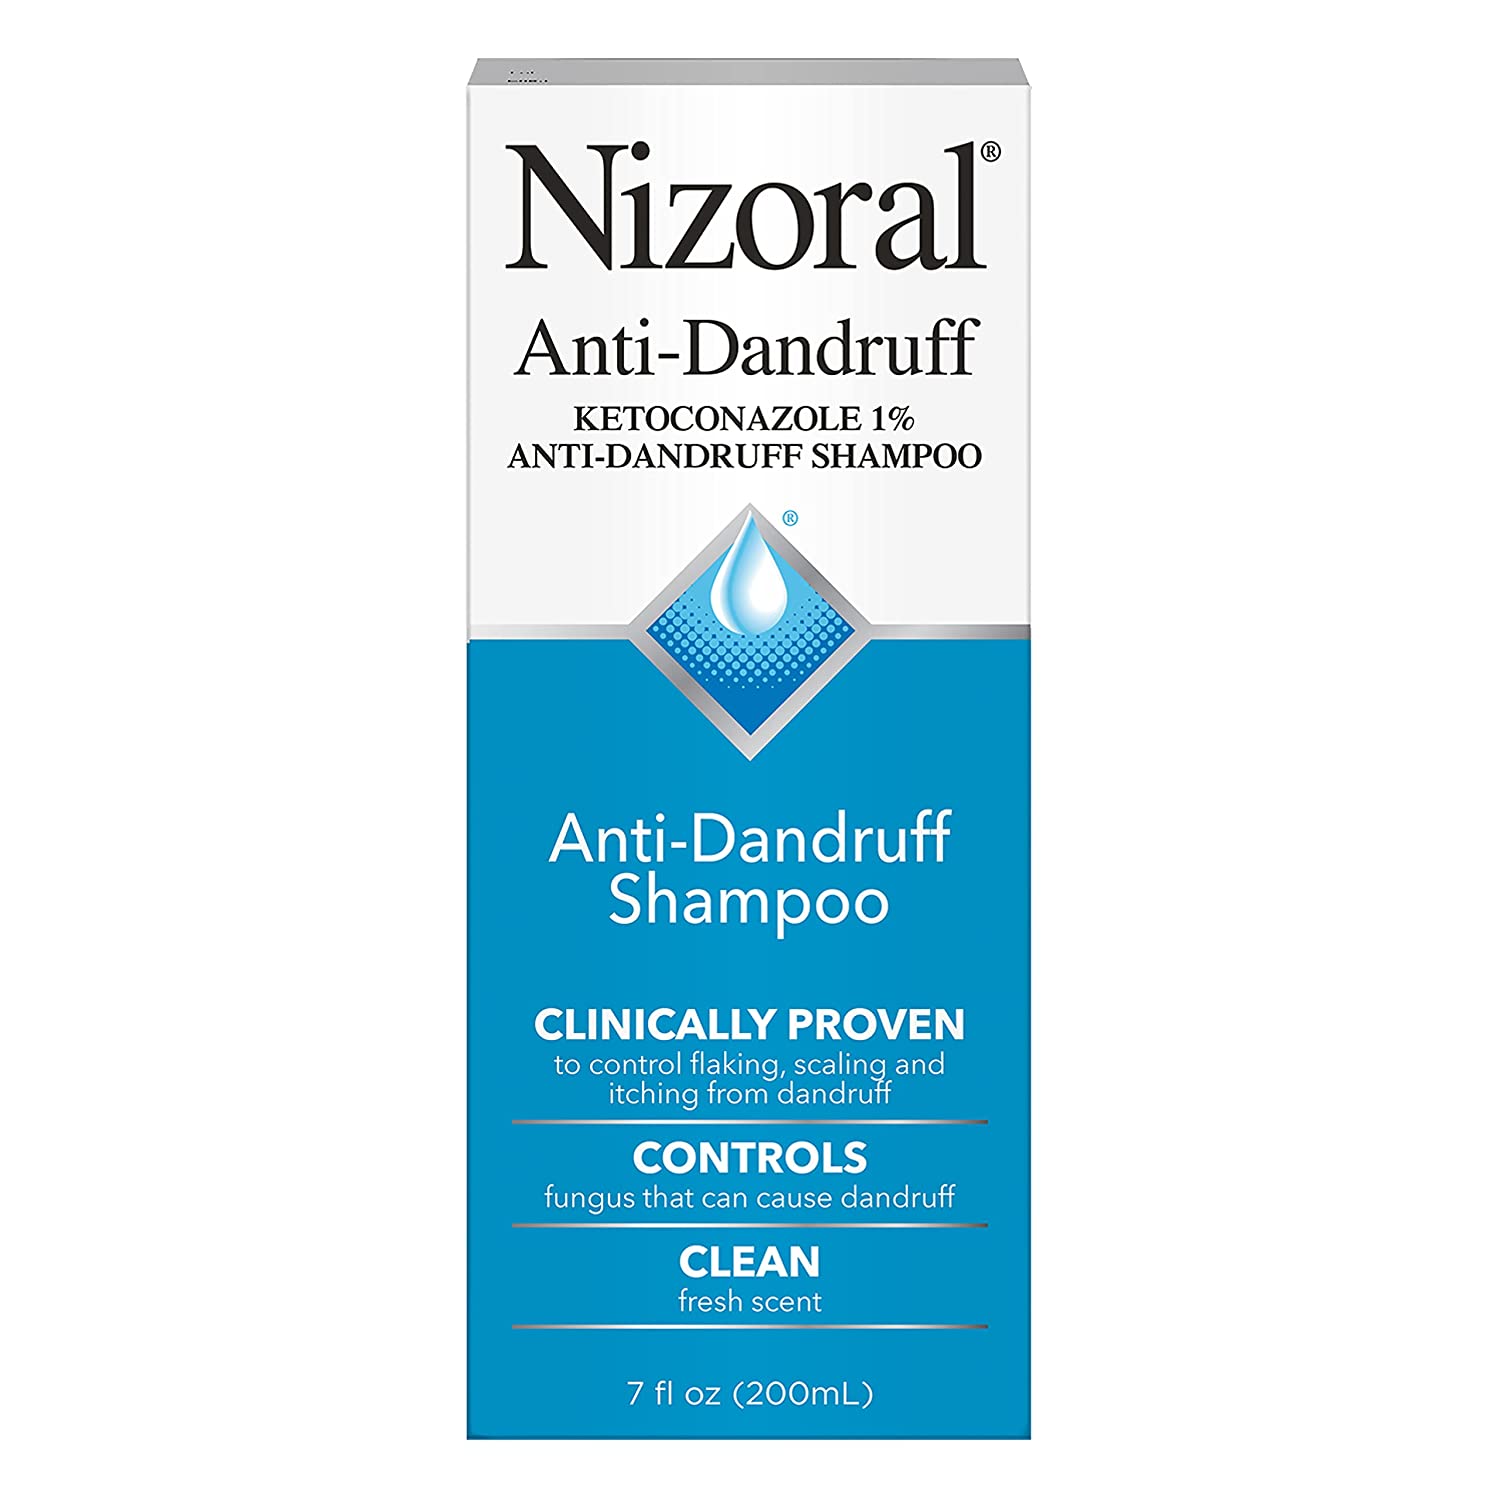 7-Oz Nizoral Anti-Dandruff Shampoo $10.45 w/ S&S + Free Shipping w/ Prime or on $25+